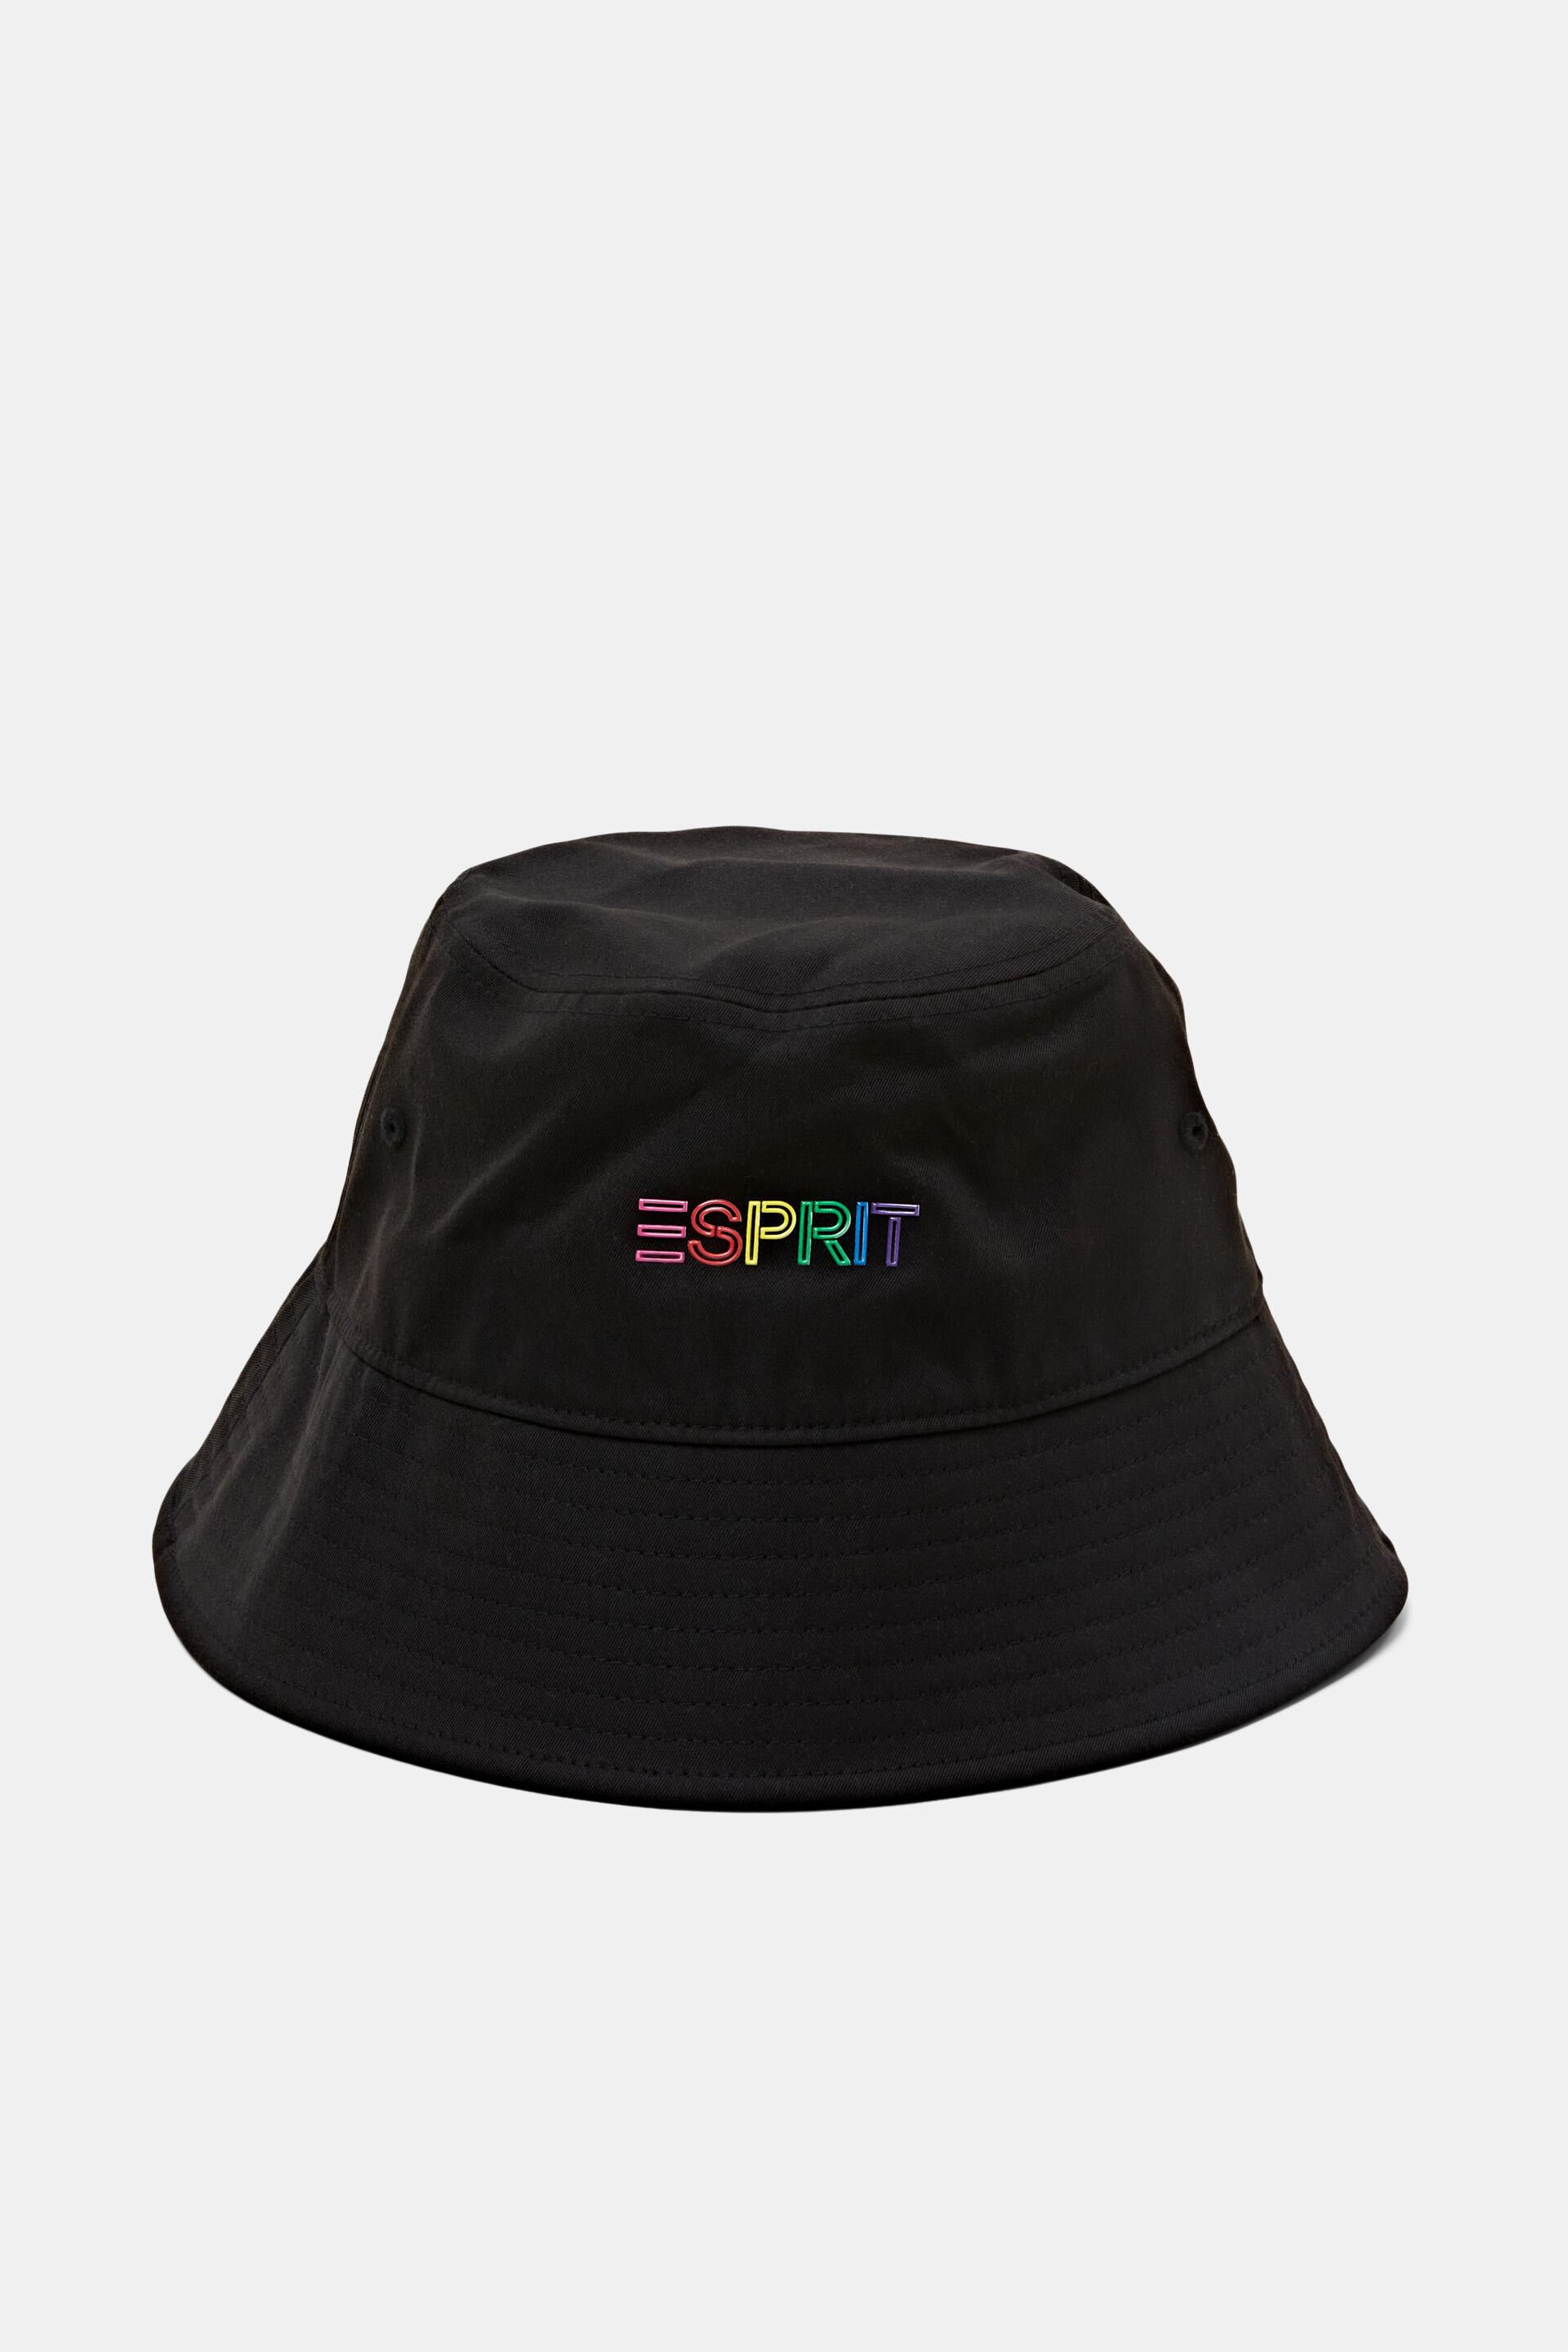 Esprit Twill Hat Bucket Appliqué